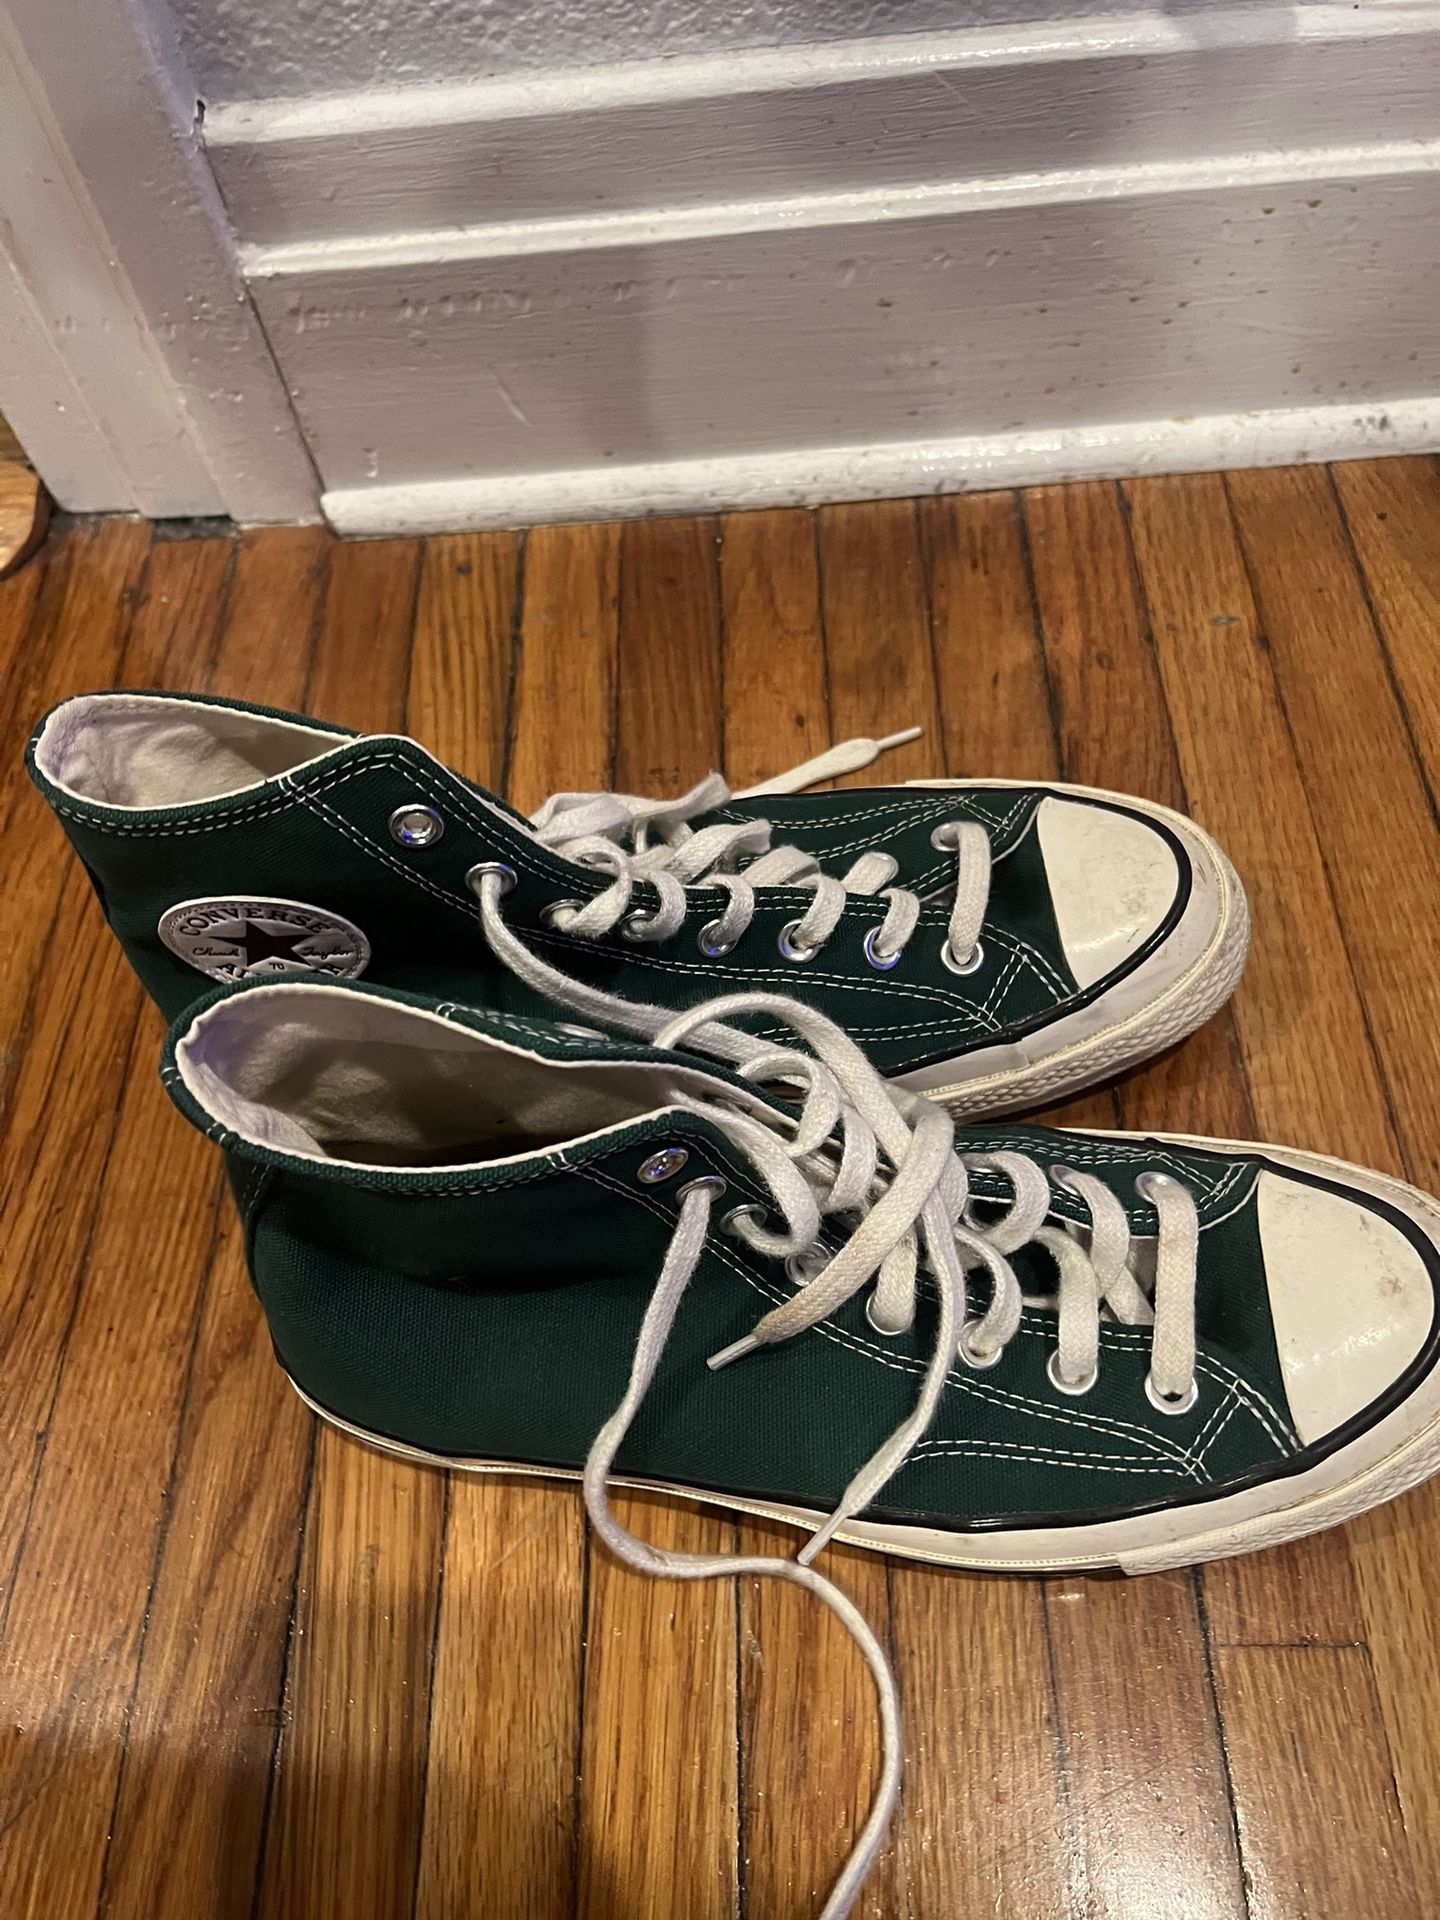 Green Chuck 70 Converse Size 8